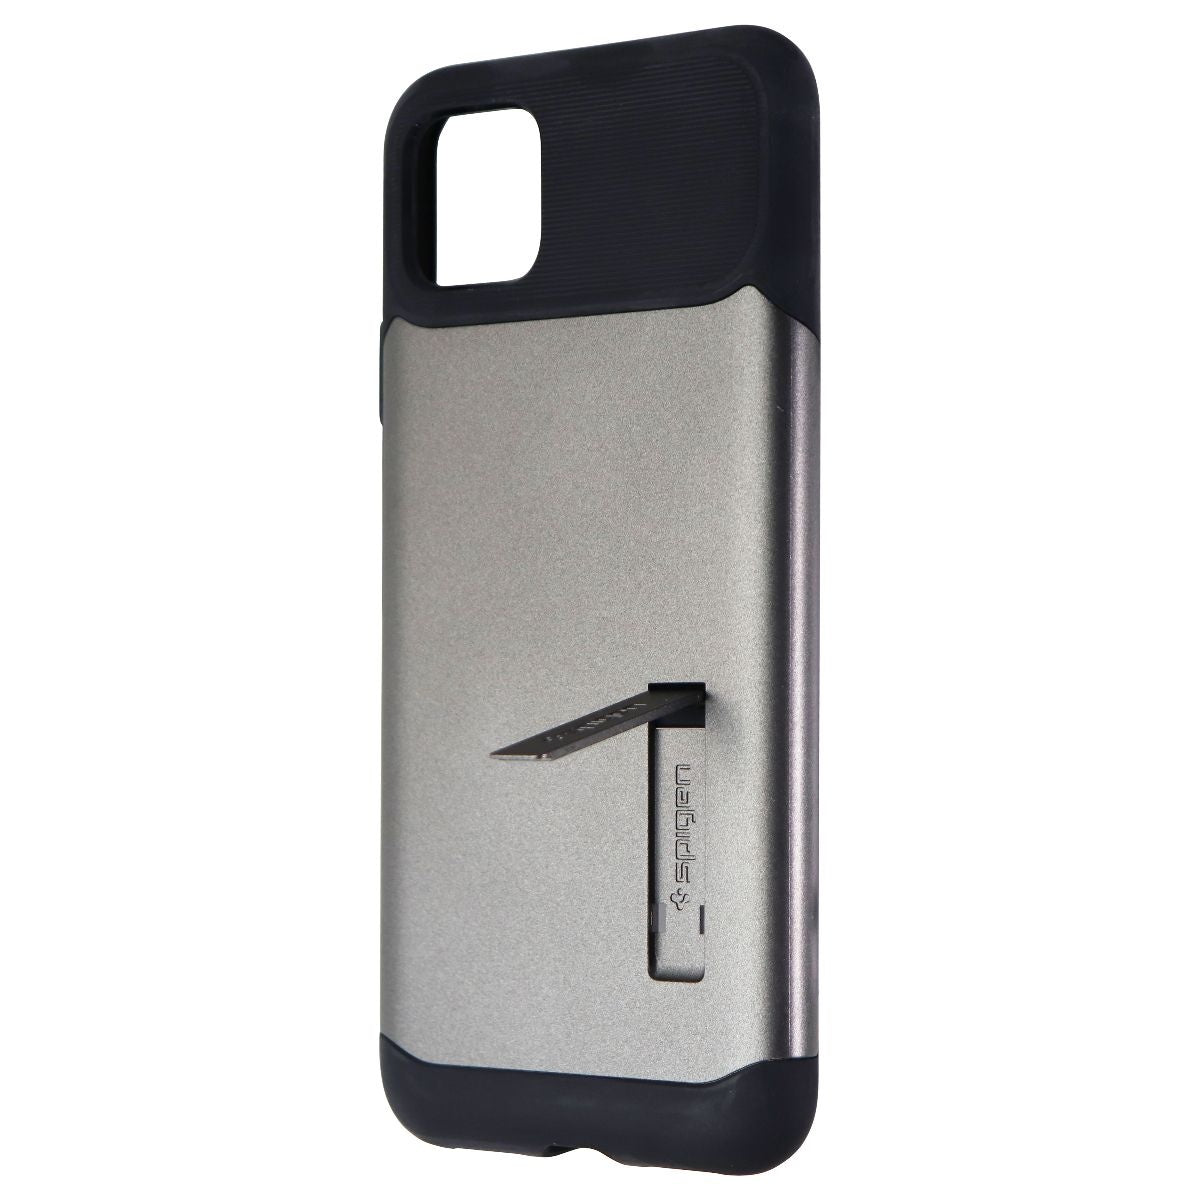 Spigen Slim Armor Case for Google Pixel 4 XL Case (2019) - Gunmetal/Black Cell Phone - Cases, Covers & Skins Spigen    - Simple Cell Bulk Wholesale Pricing - USA Seller